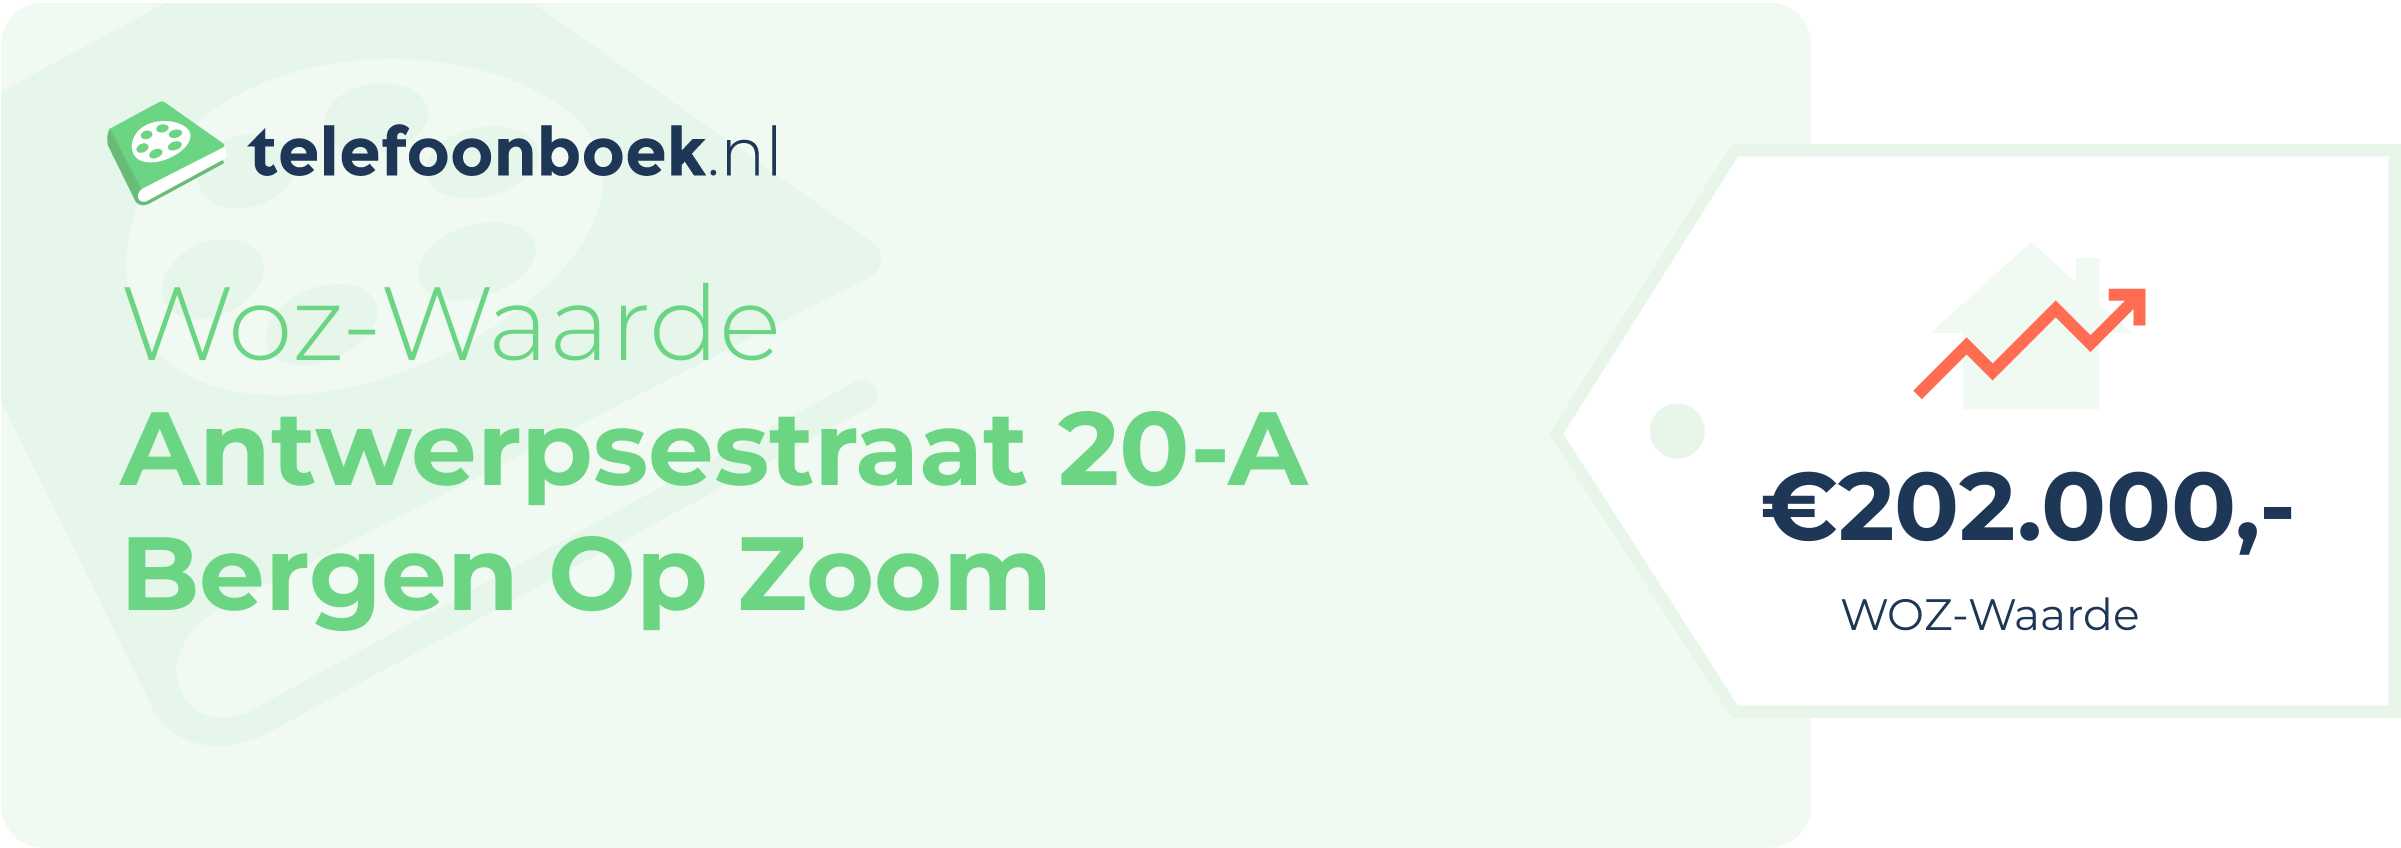 WOZ-waarde Antwerpsestraat 20-A Bergen Op Zoom